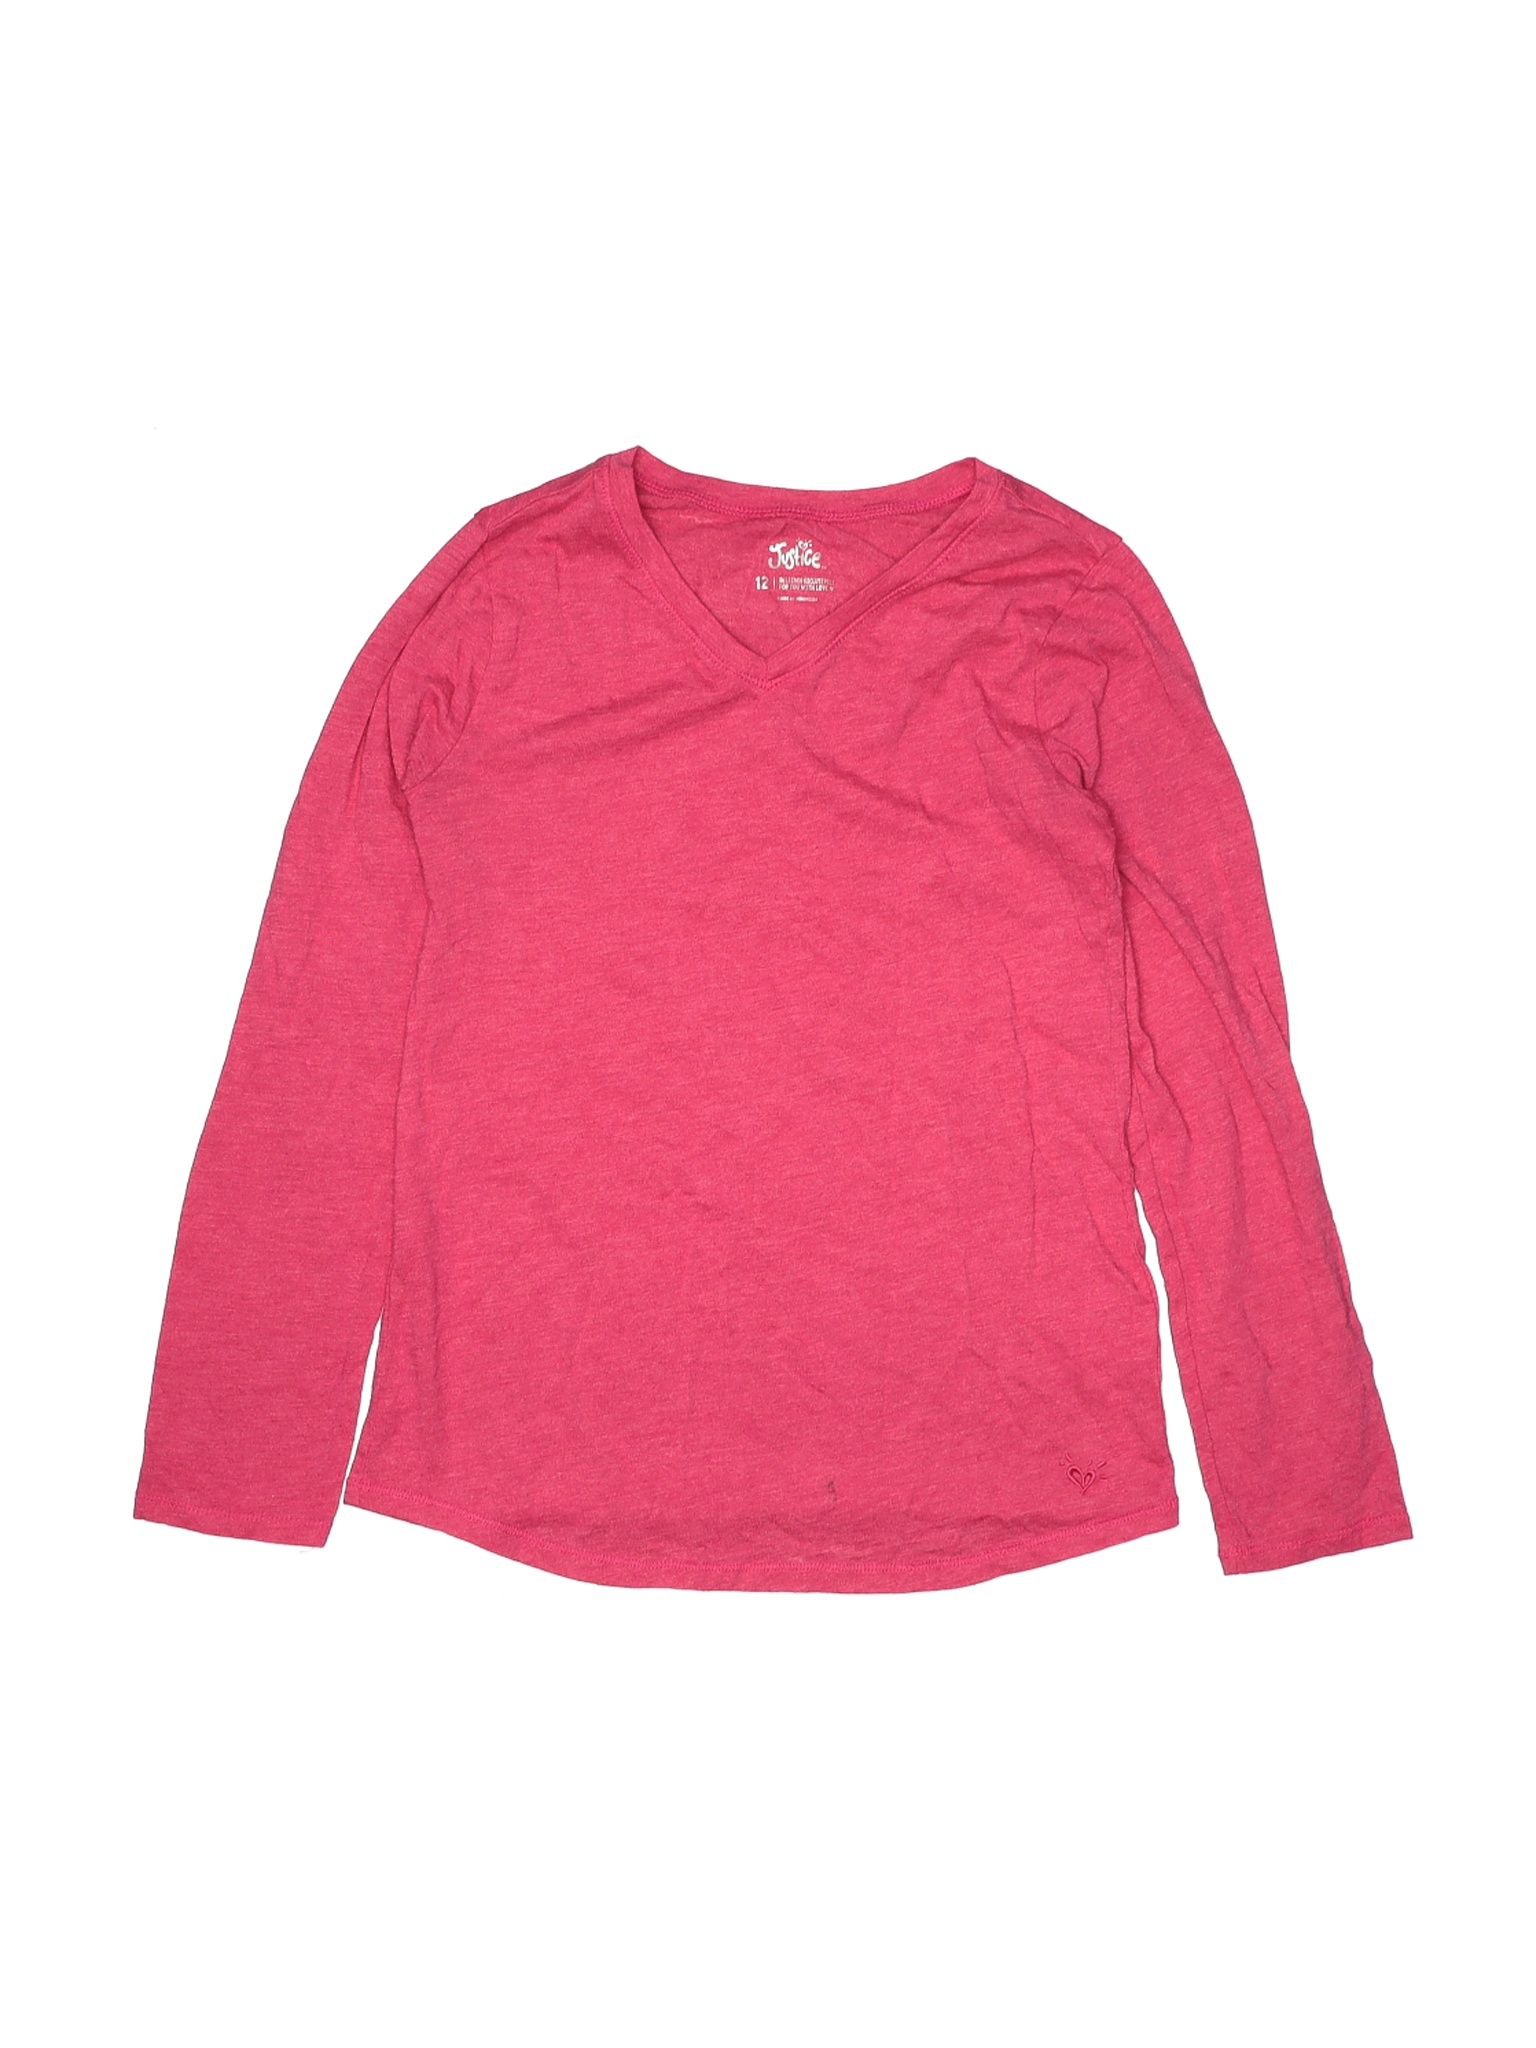 Justice Girls Pink Long Sleeve T-Shirt 12 | eBay